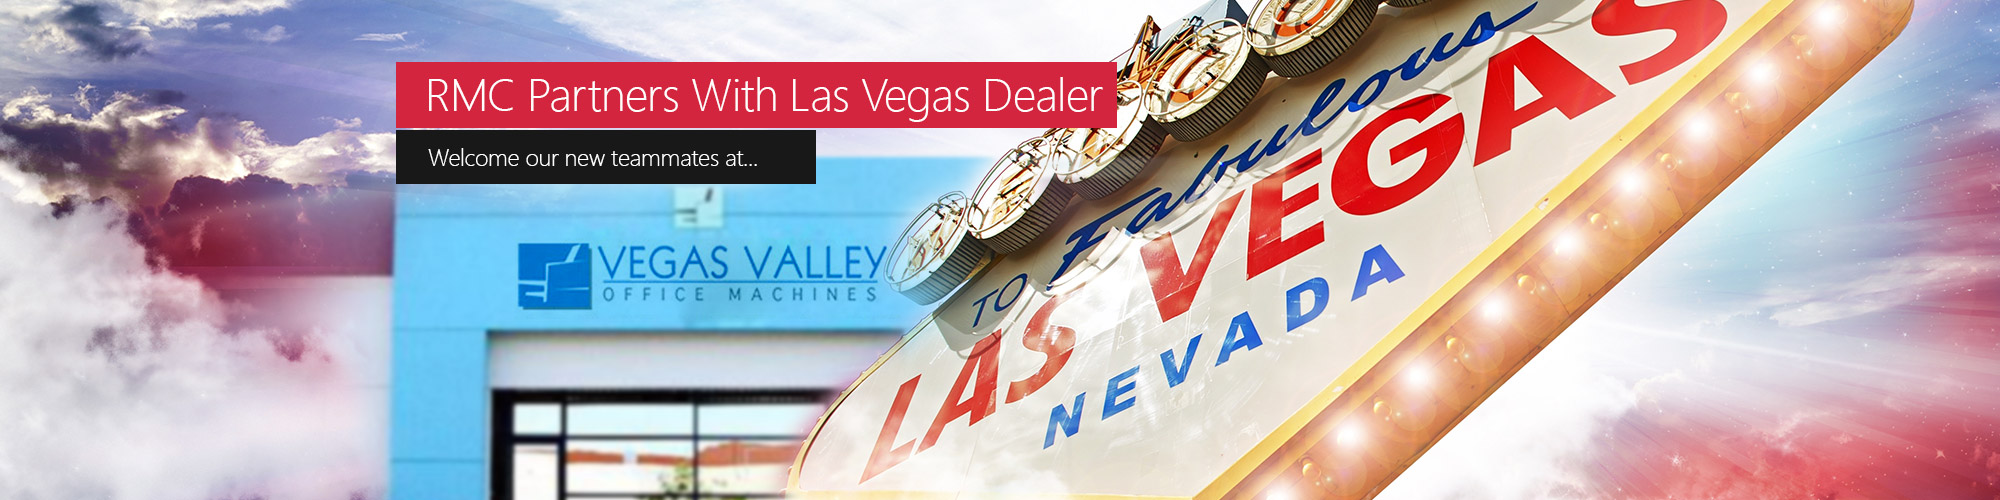 Ray Morgan Acquires Las Vegas Office Machines